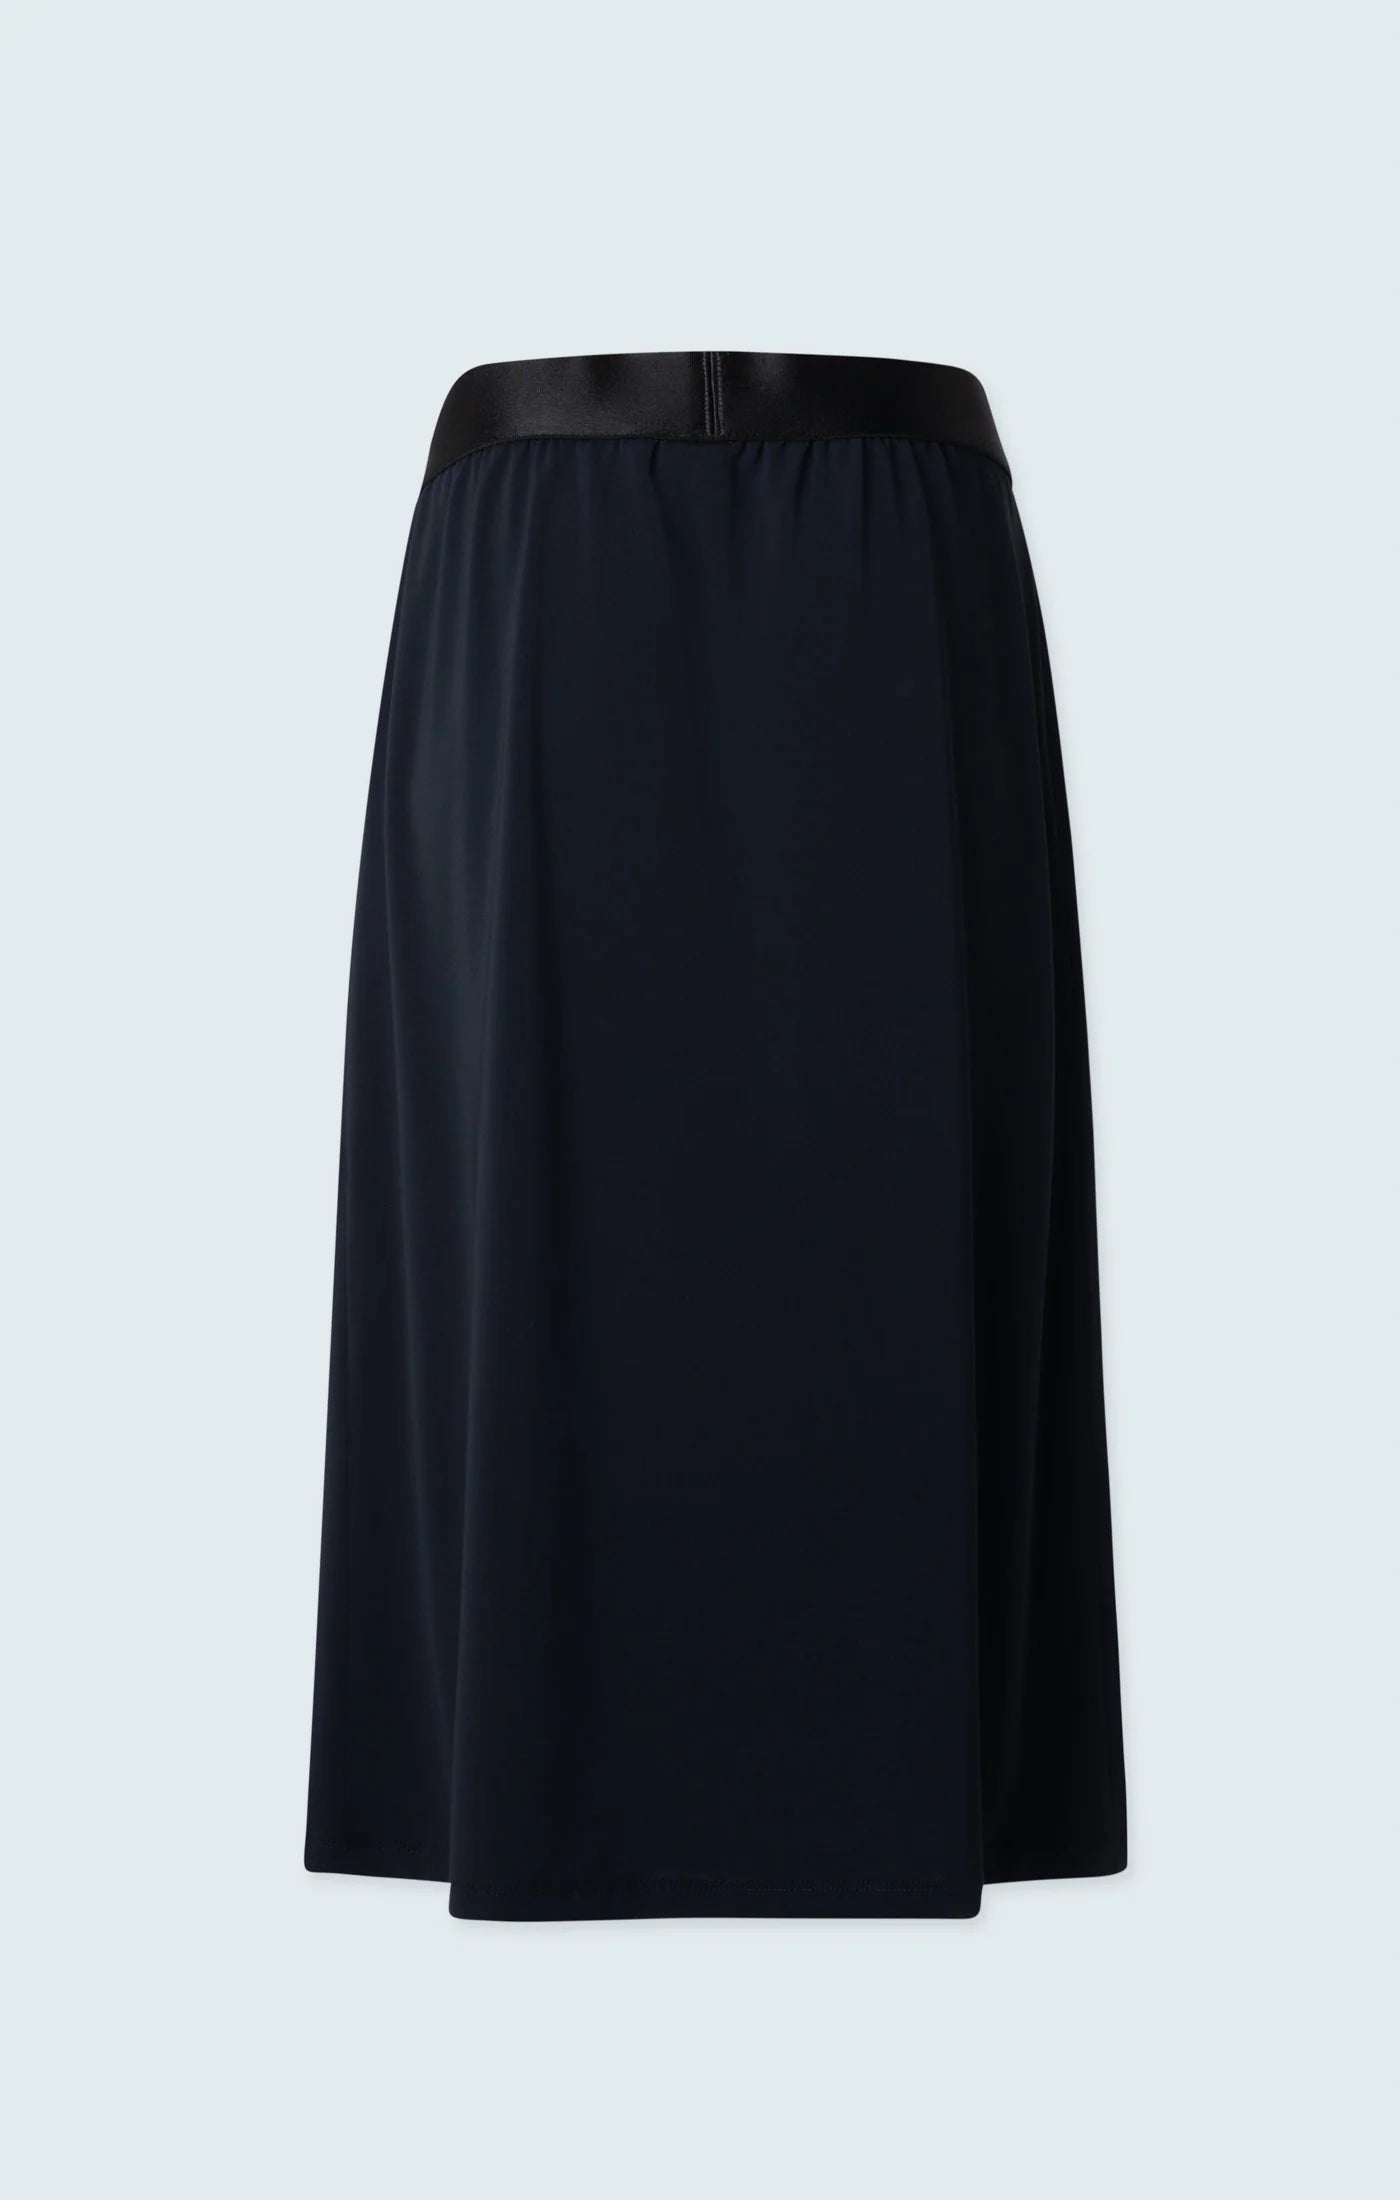 Iris Setlakwe Elastic Waist Skirt with Front Slit